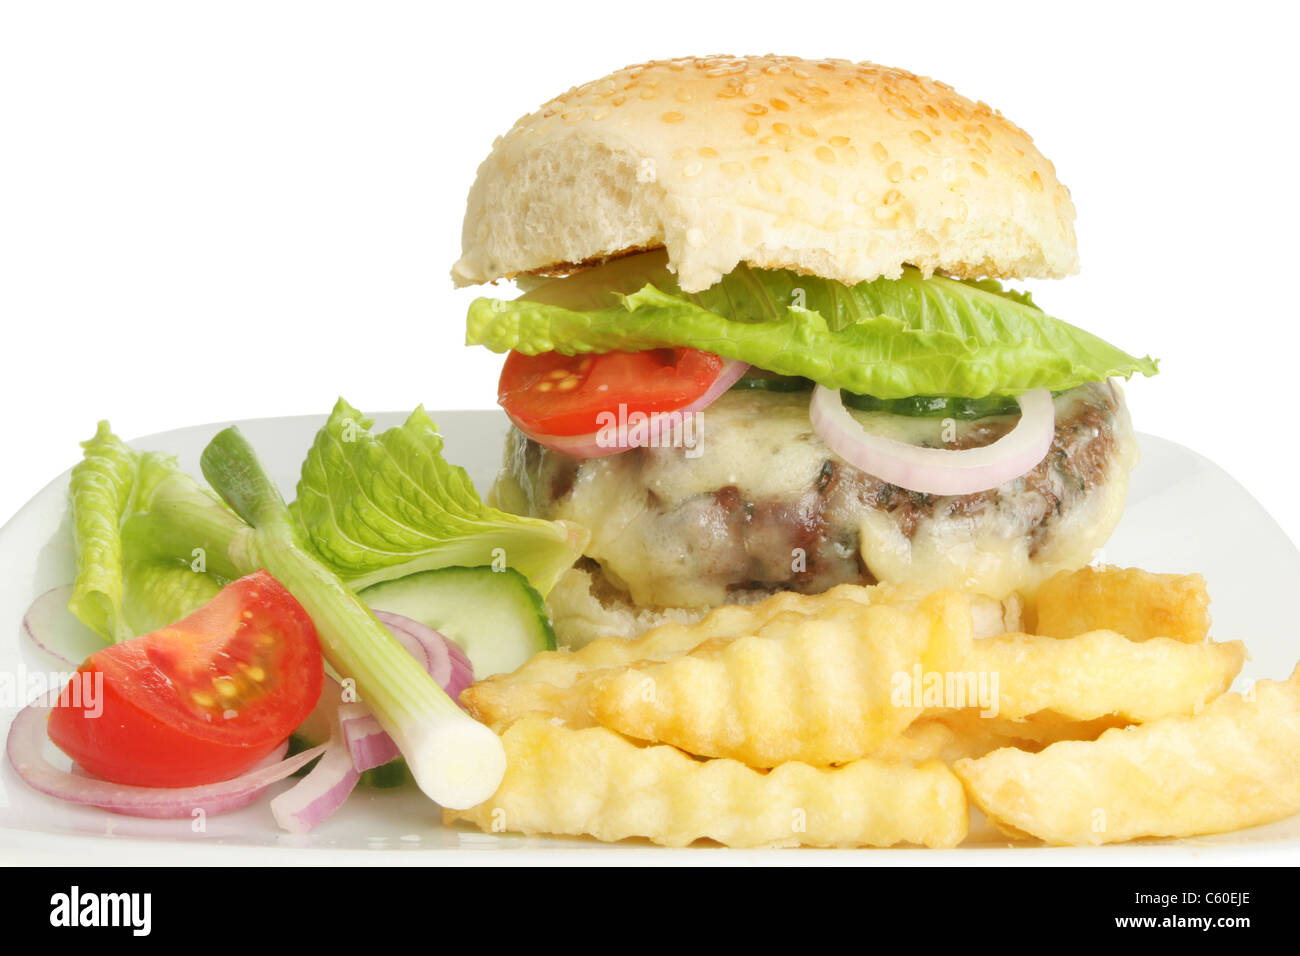 Closeup of a juicy cheese burger fries and salad Stock Photo